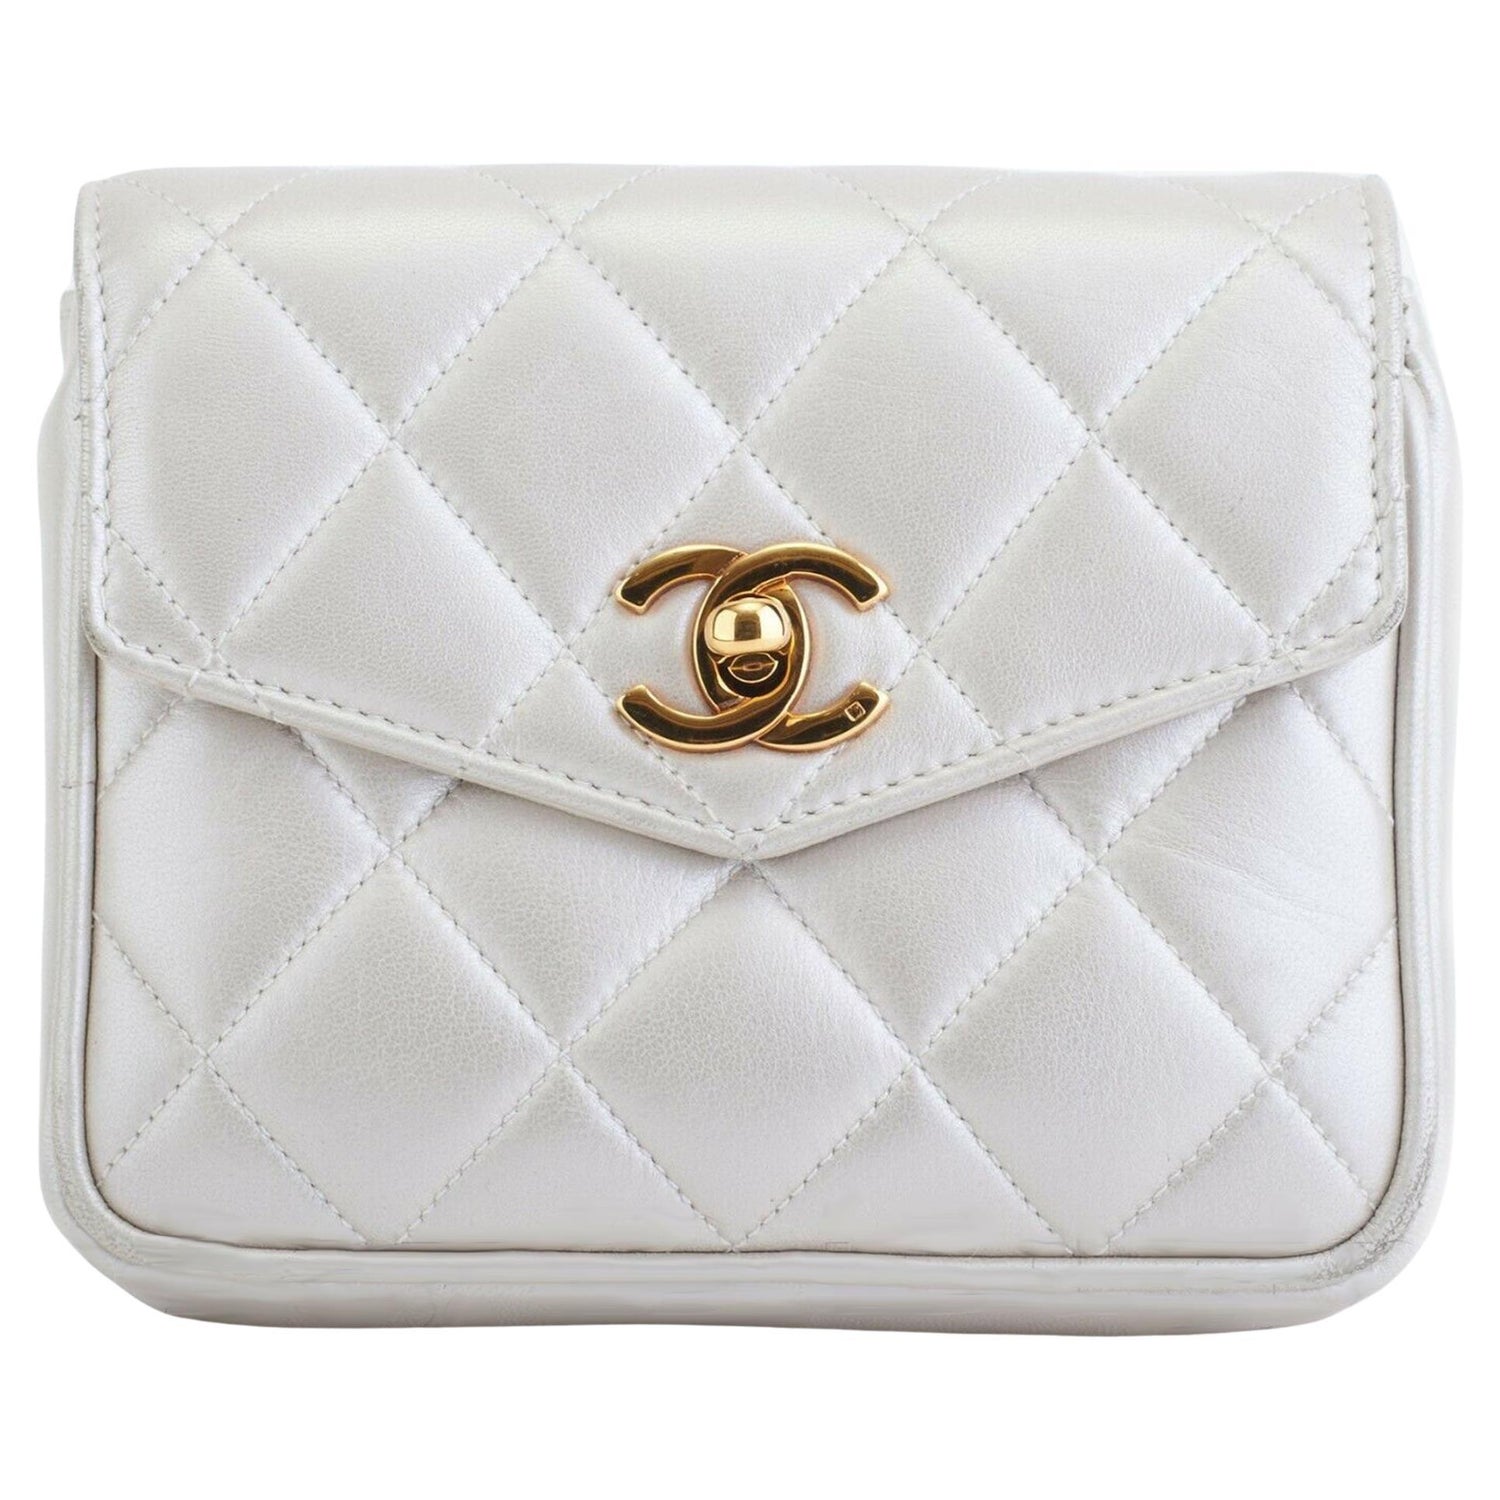 Chanel Vintage Square Quilted Fanny Pack Waist Bum Belt Bag